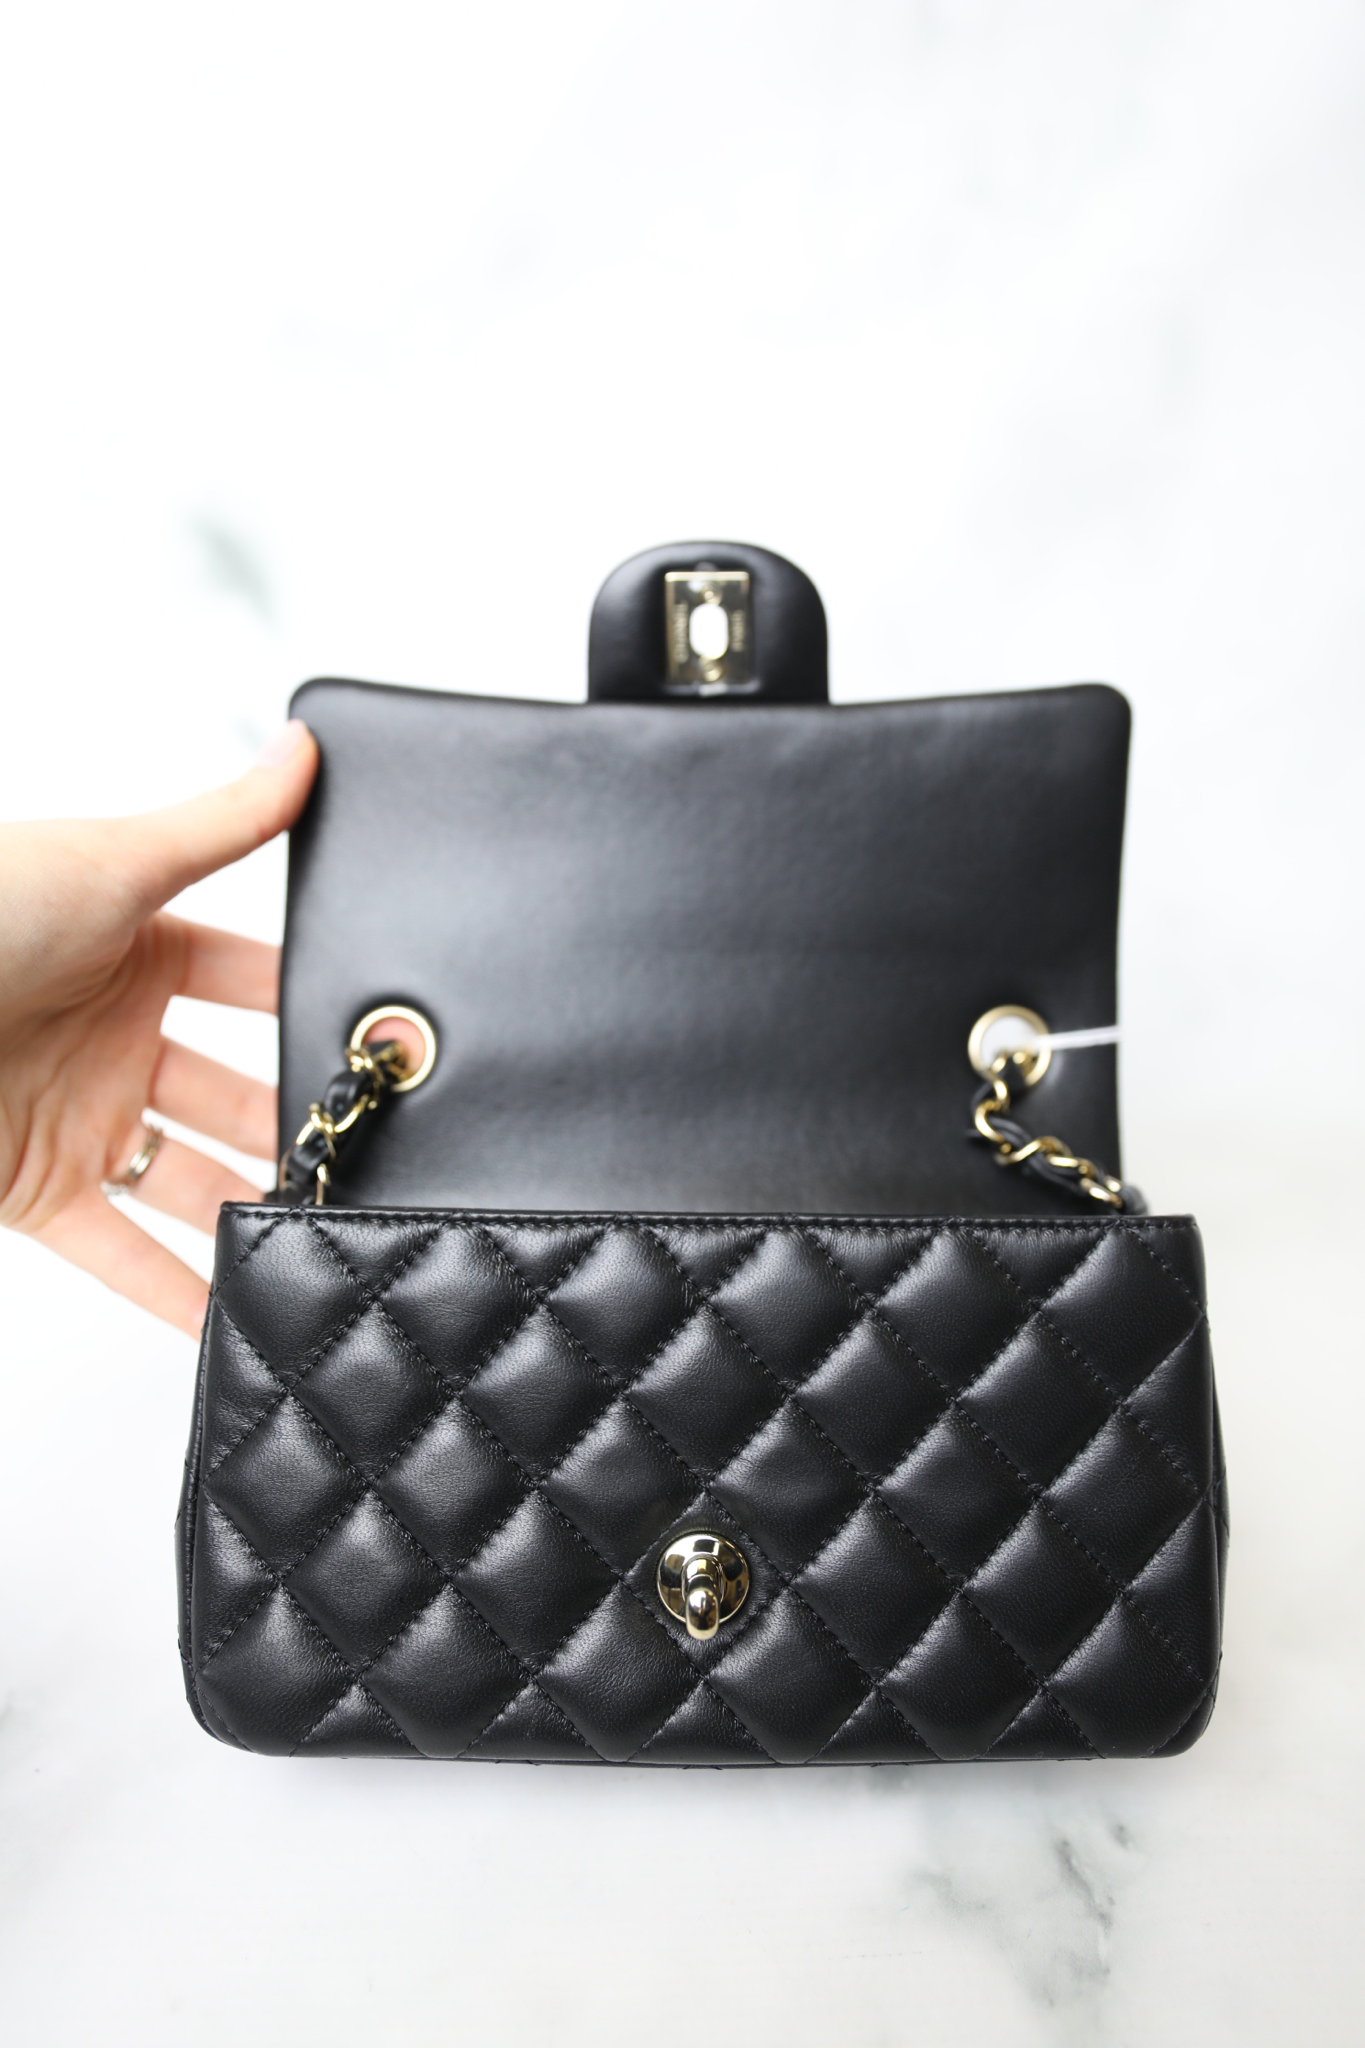 Chanel Heart Bag, Large, Black Lambskin Leather, Gold Hardware, New in Box  WA001